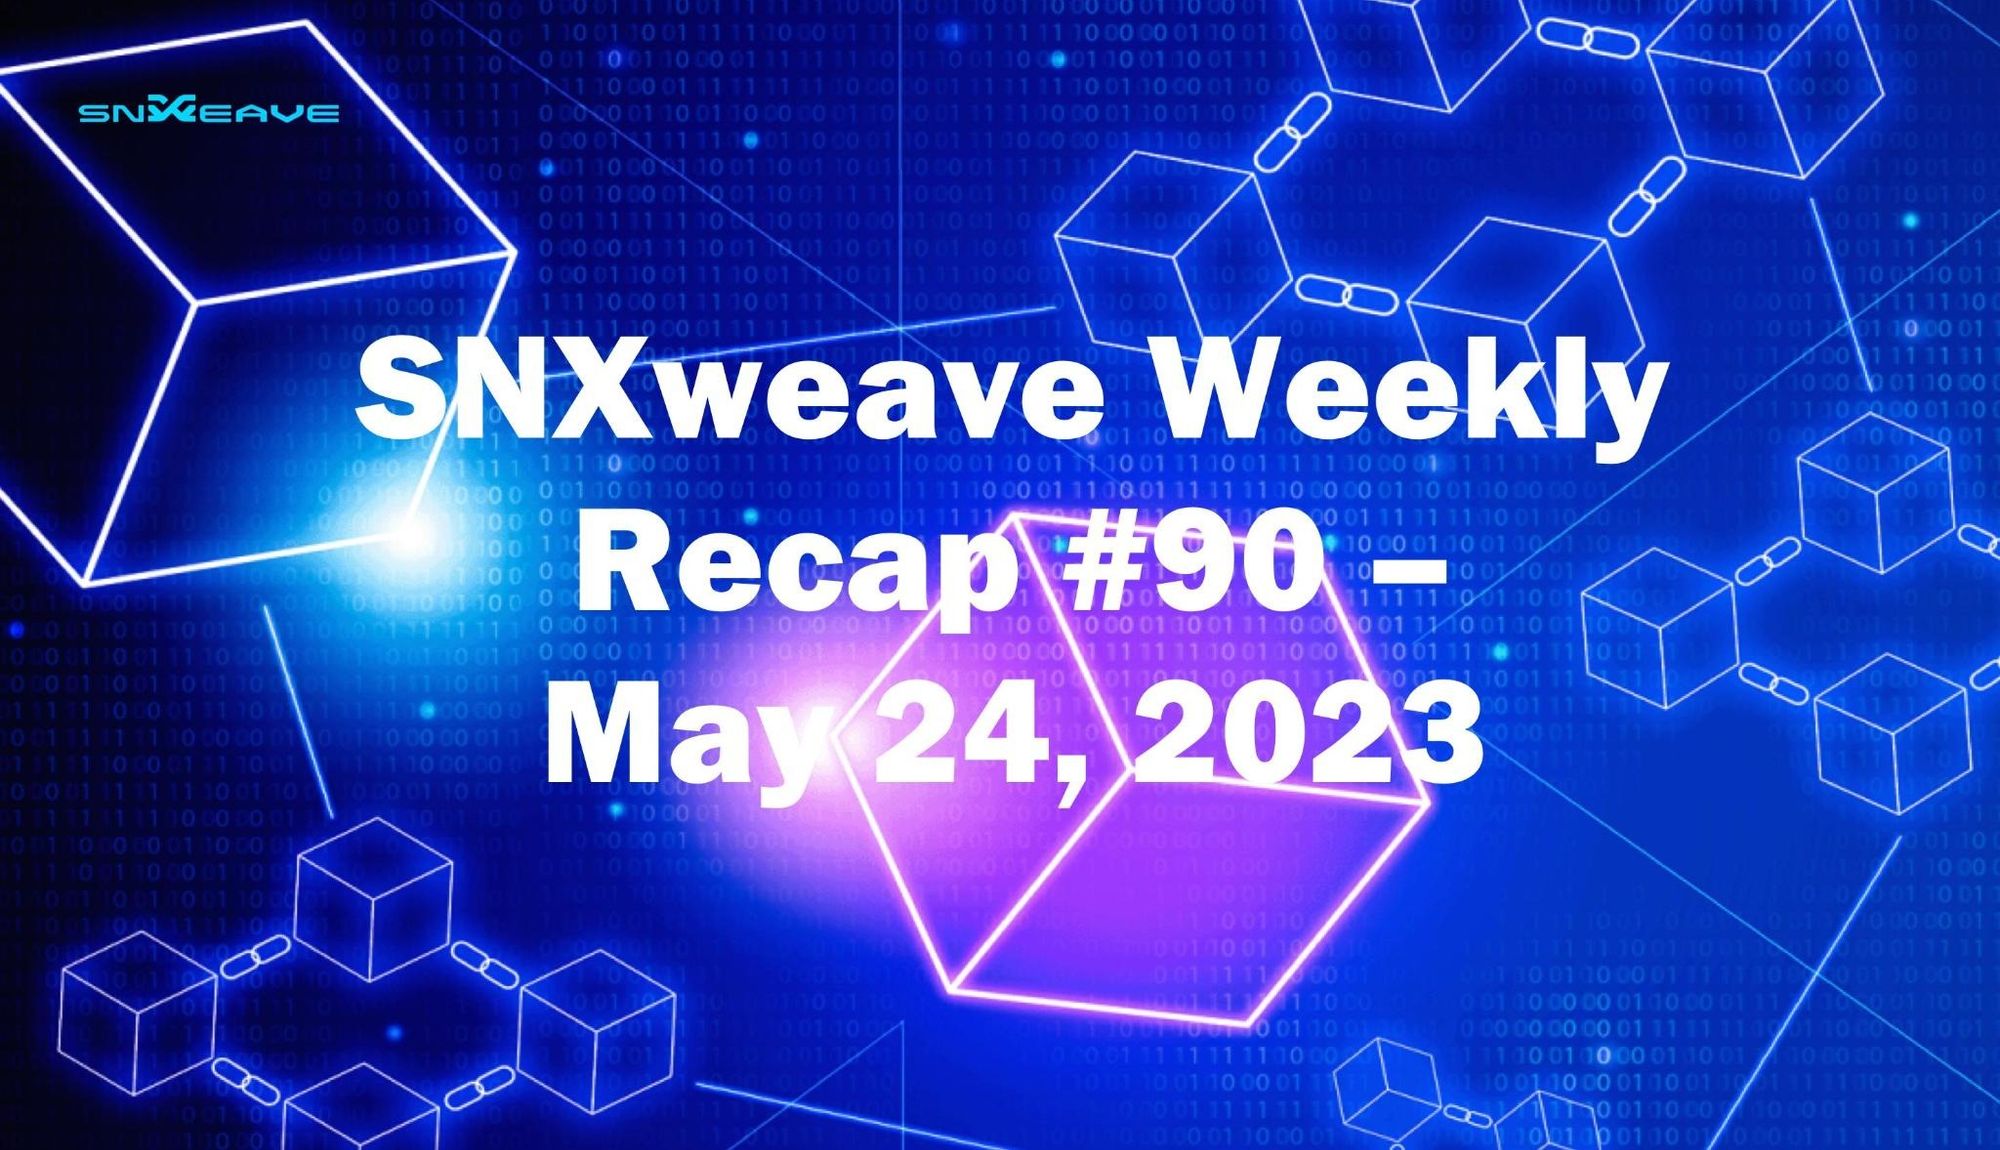 SNXweave Weekly Recap 90